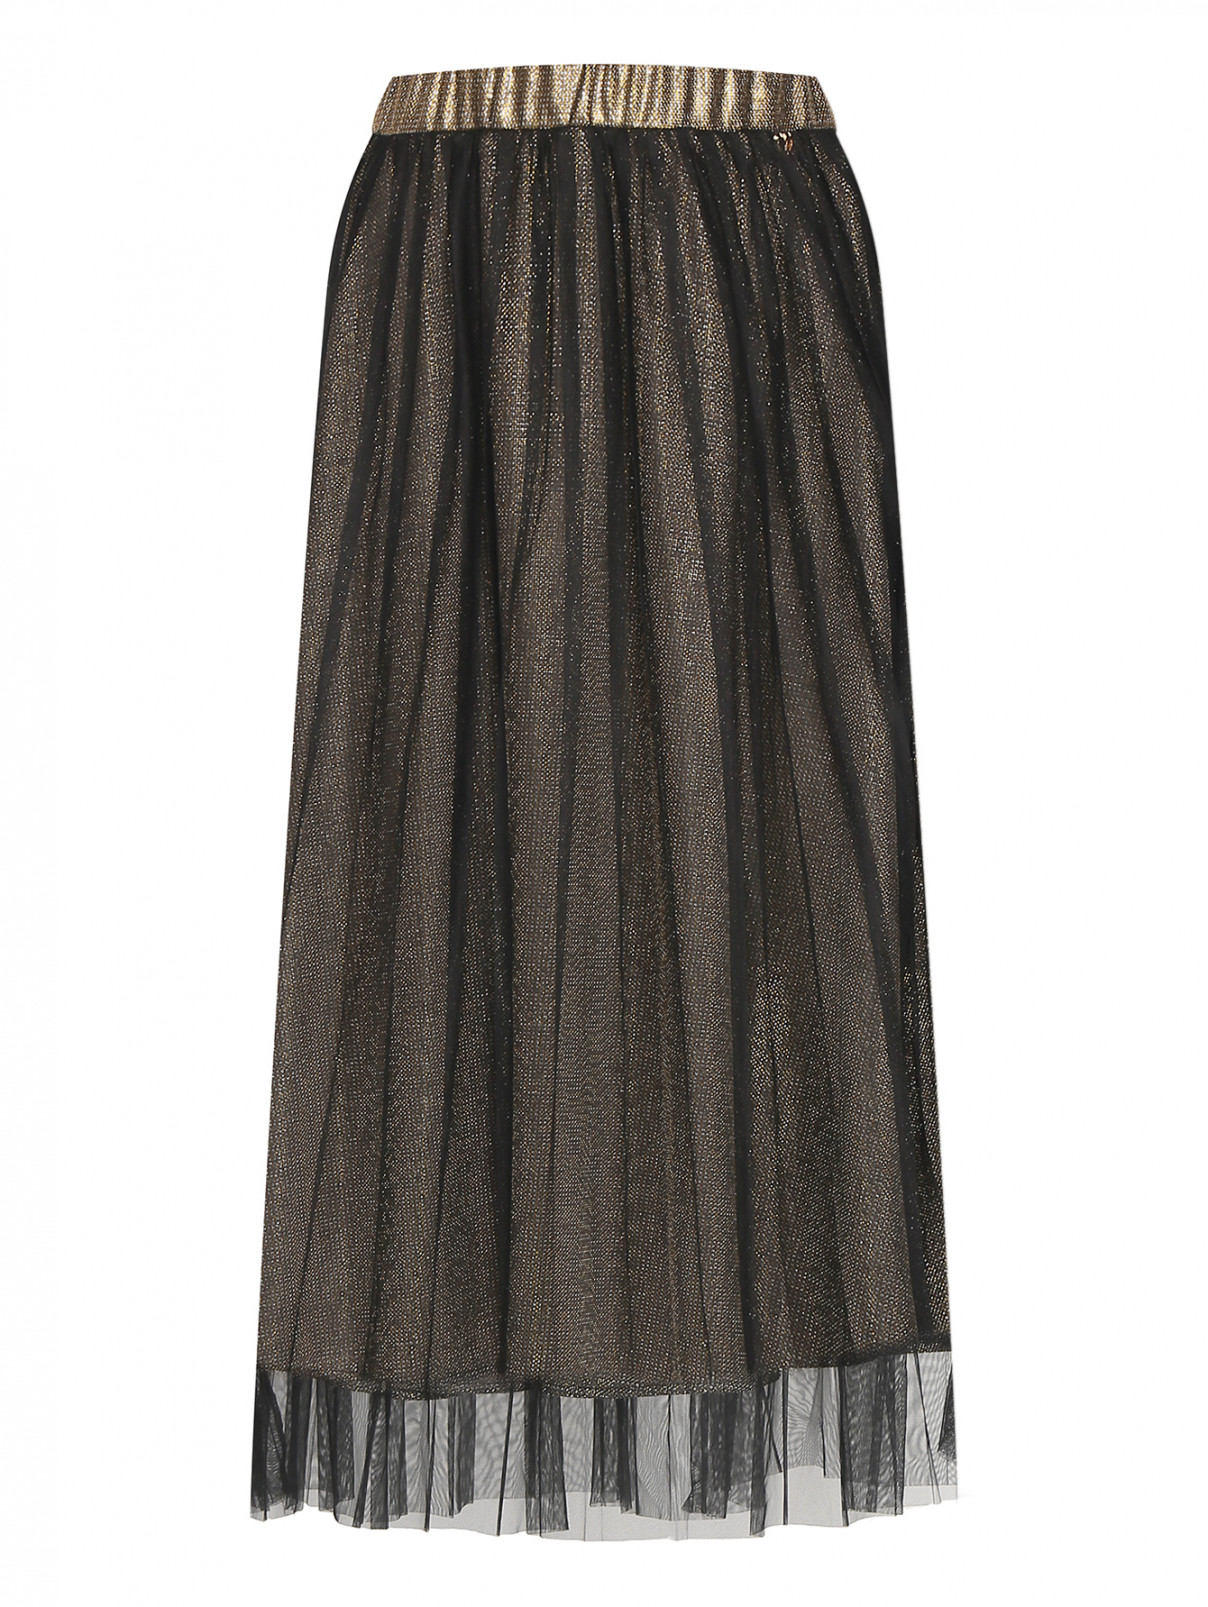 Золотистая юбка с сеткой My Twin  –  Общий вид